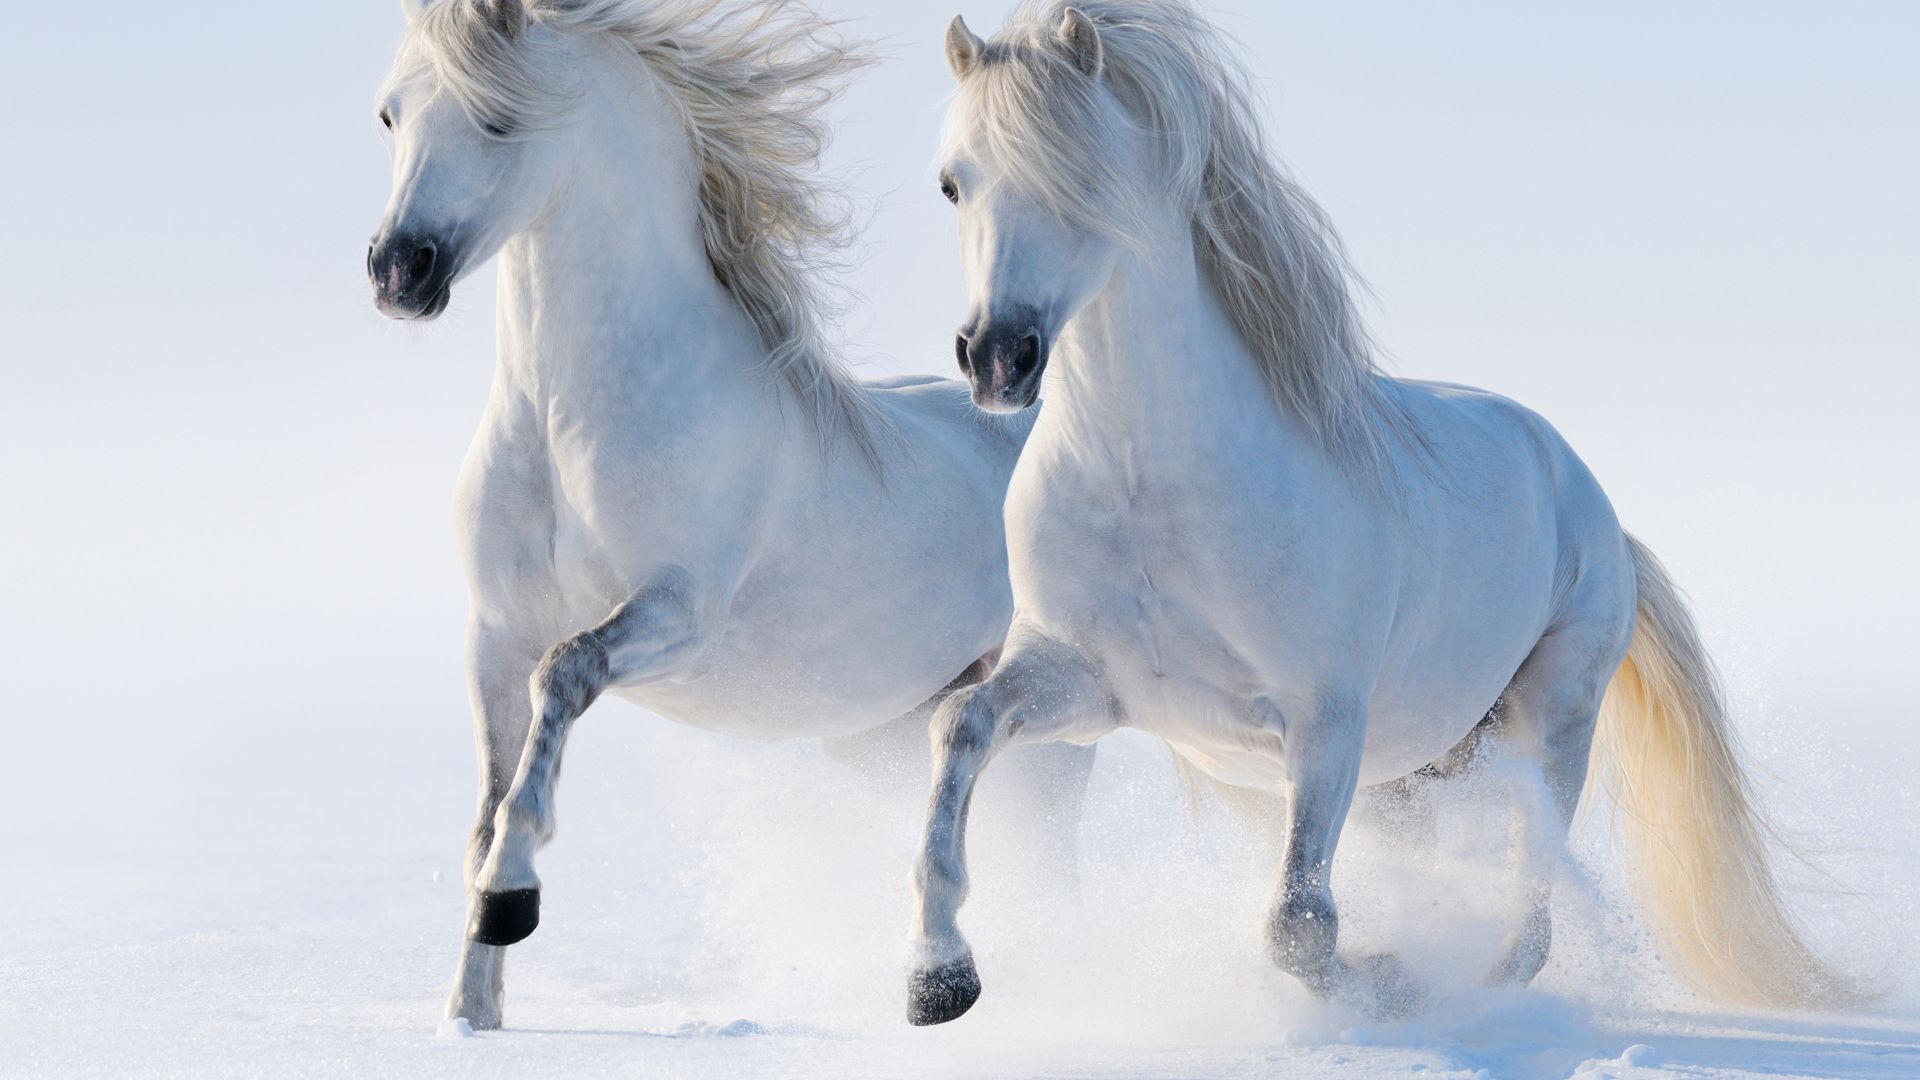 horses, cute animals, snow, winter, 5k (horizontal)